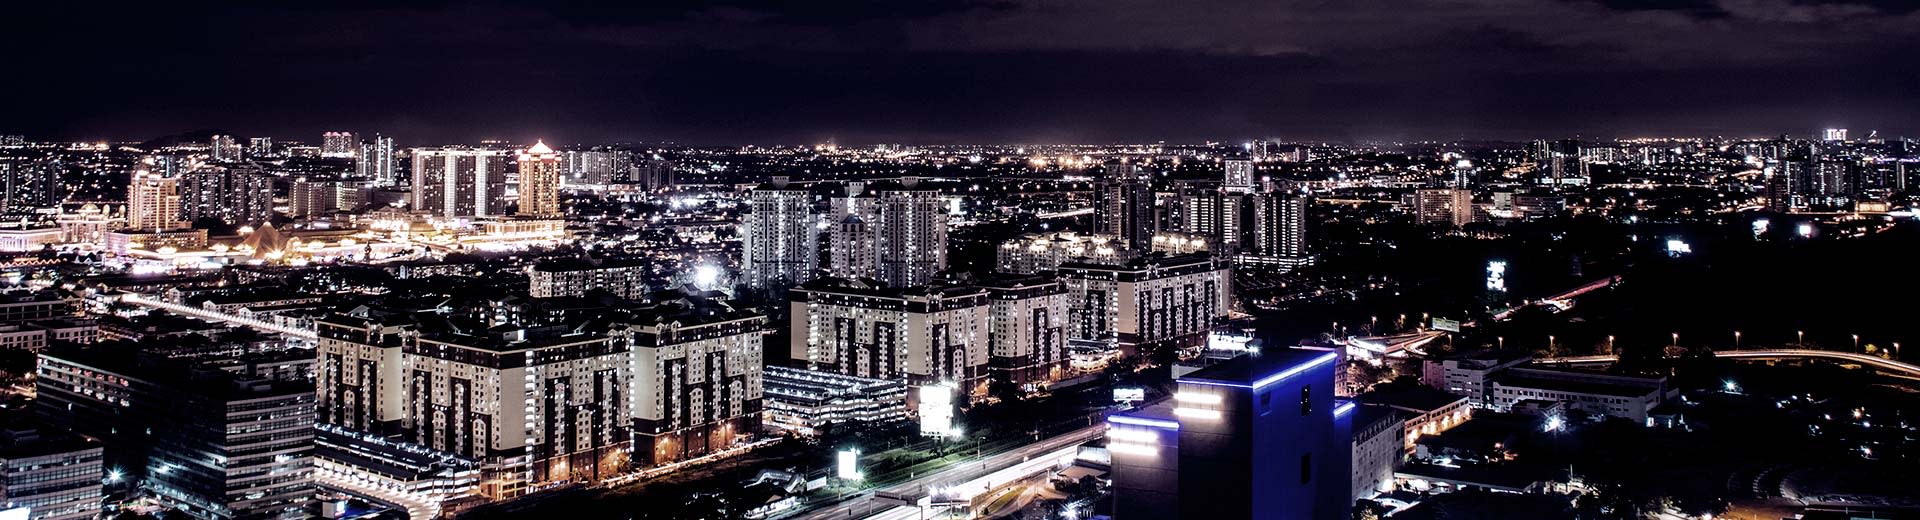 The high-rise buildings of Petaling Jaya illuminate the dark and starless sky above them.